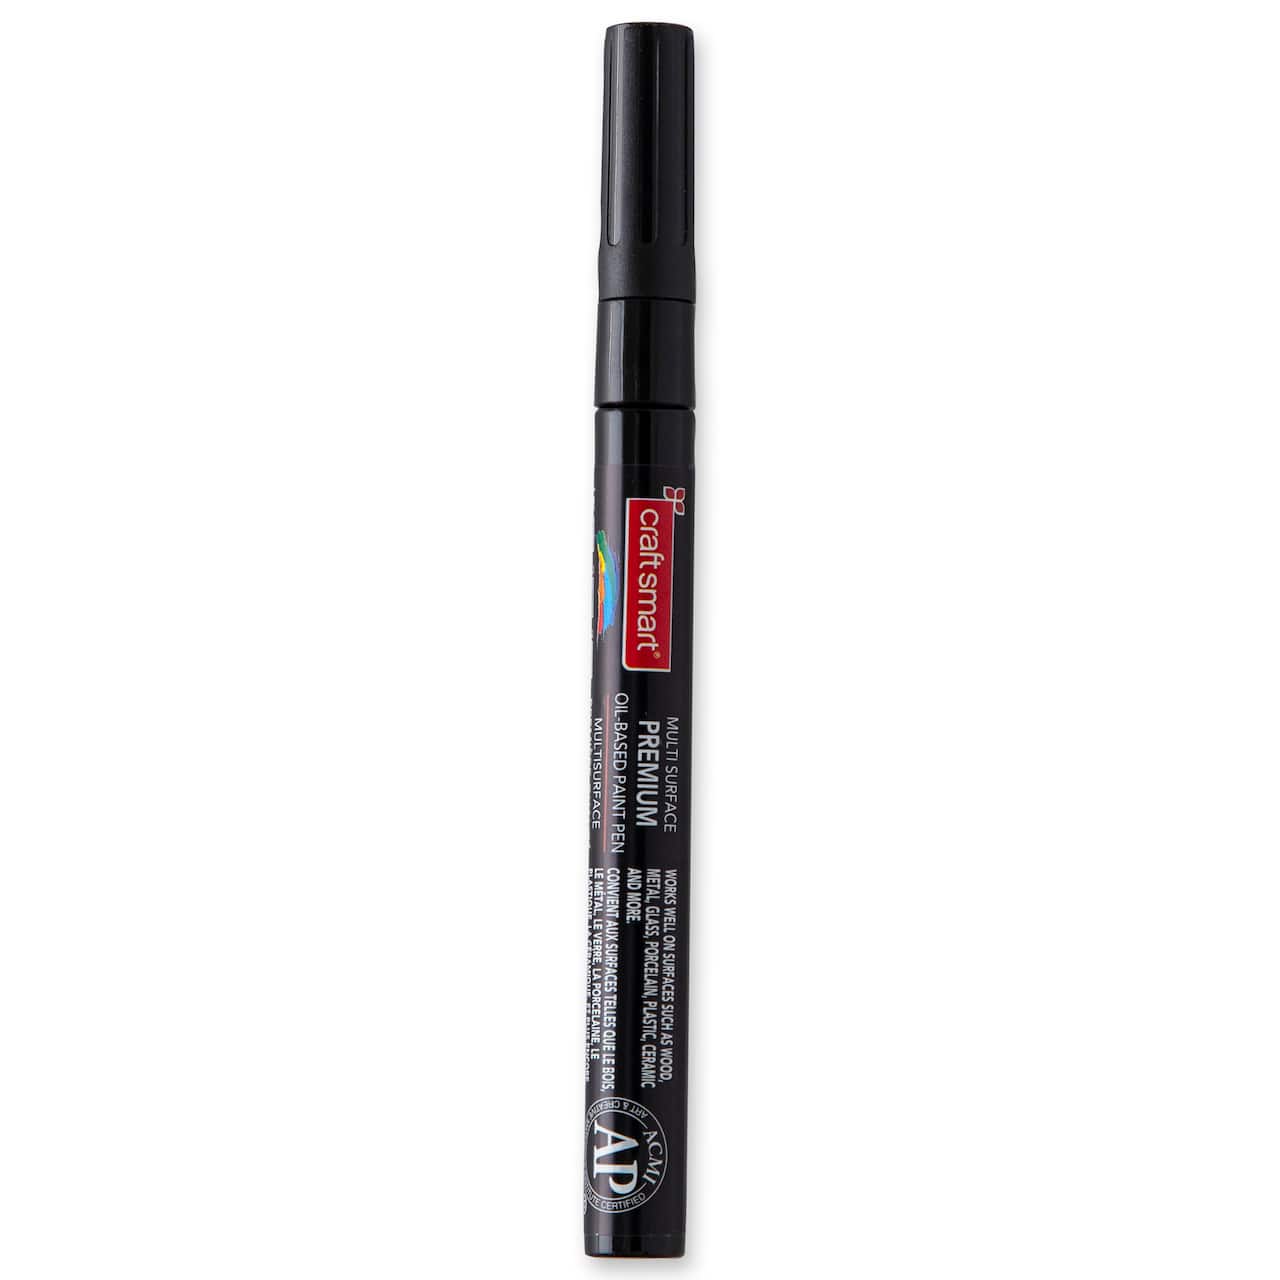 Craft Smart 12 Pack: Multi-Surface Fine Tip Premium Paint Pen